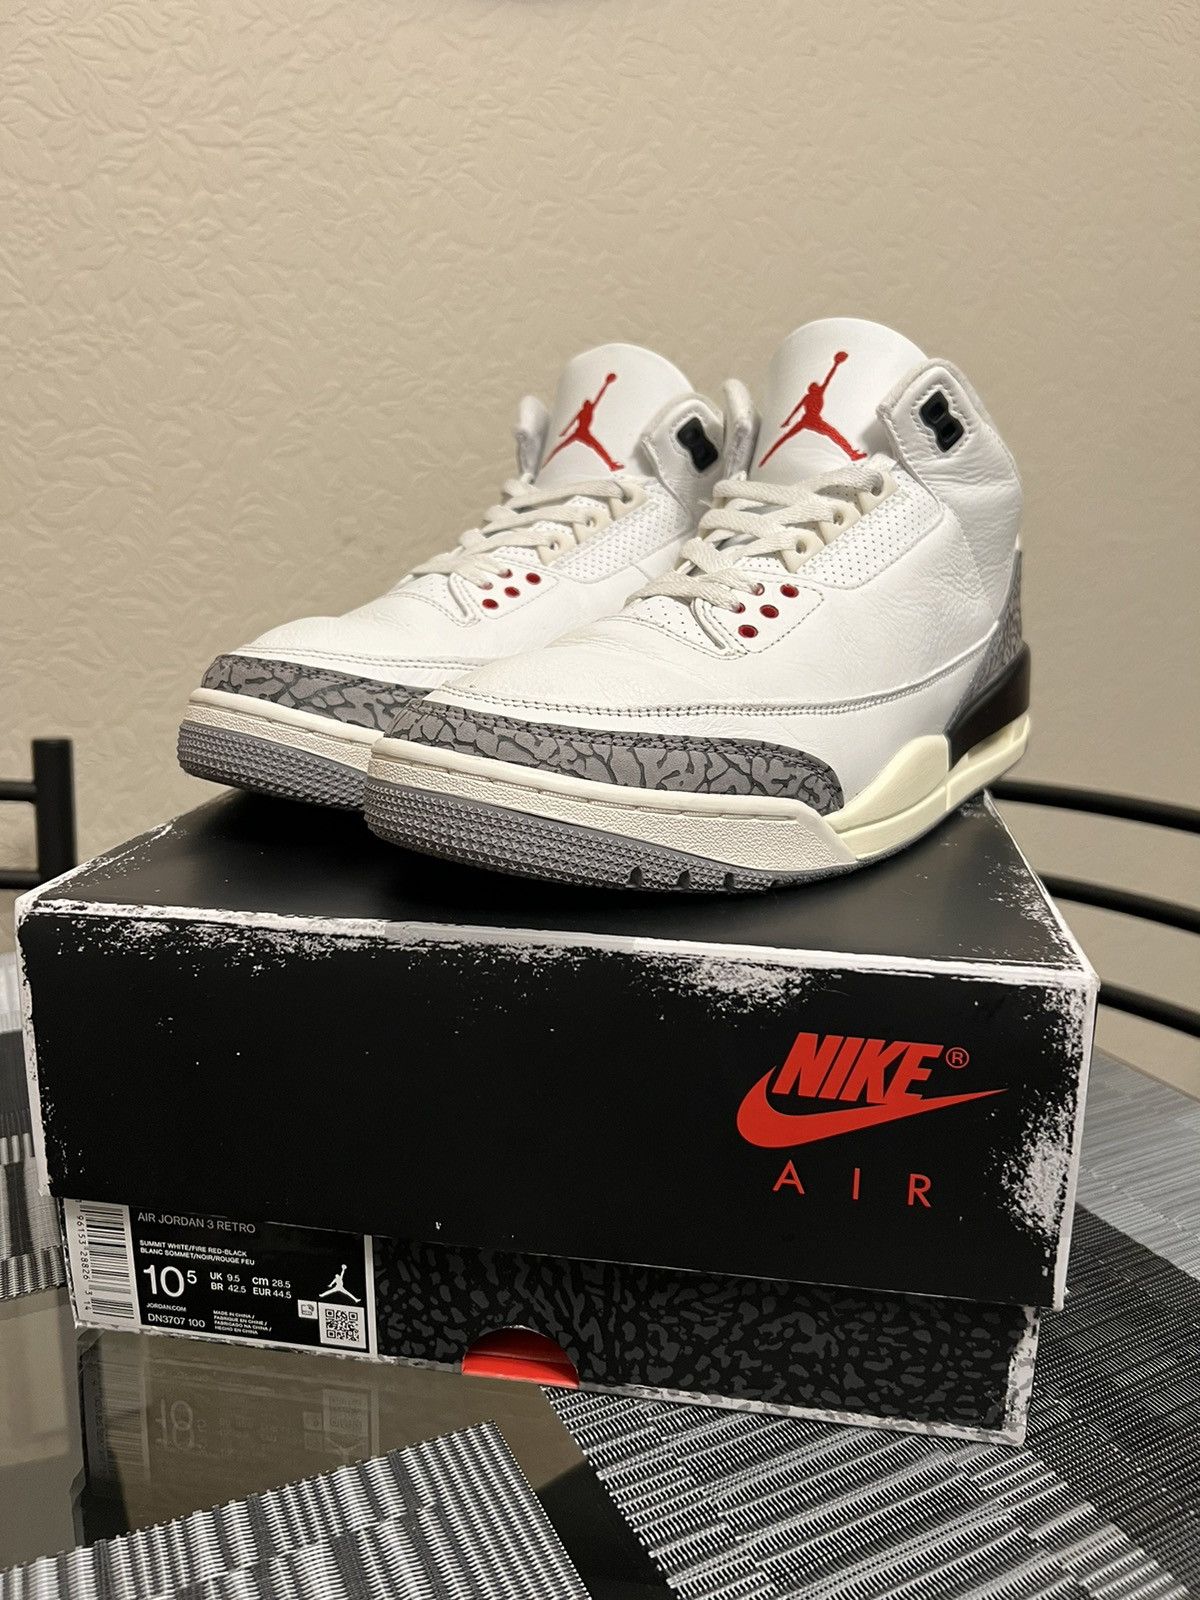 Pre-owned Jordan Nike Jordan 3 Reimagined Shoes In White